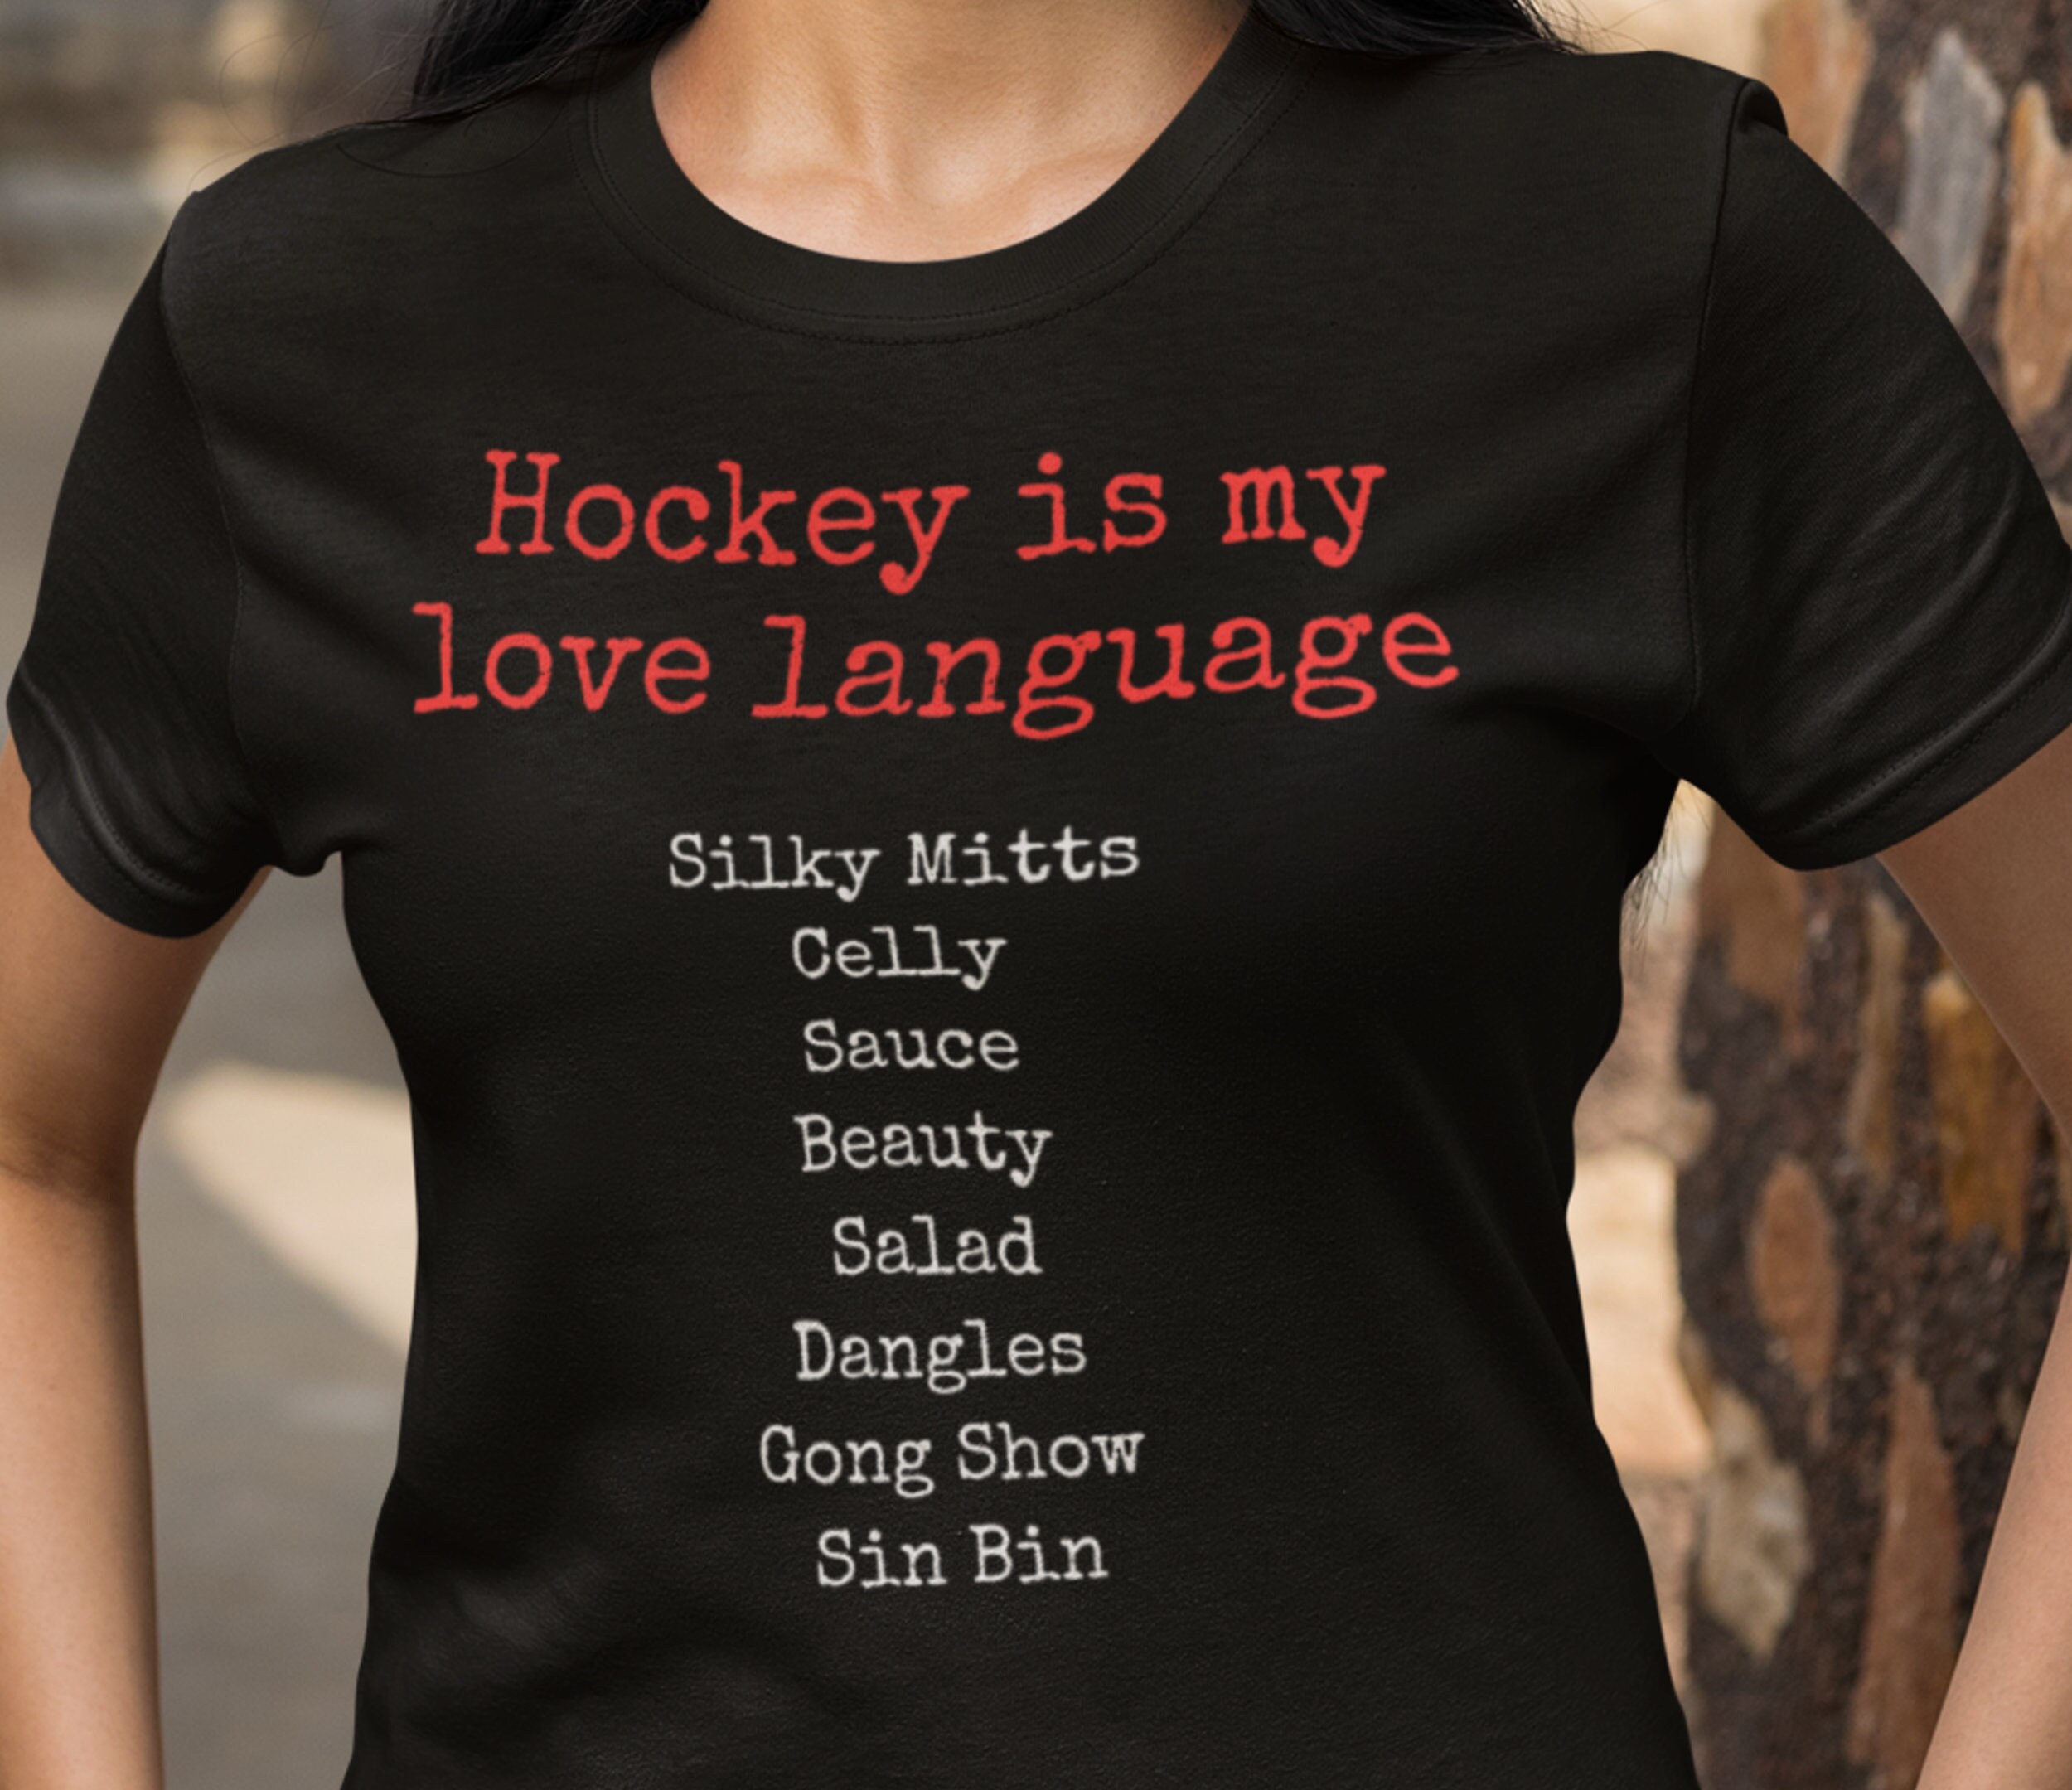 I love hockey player T-Shirt